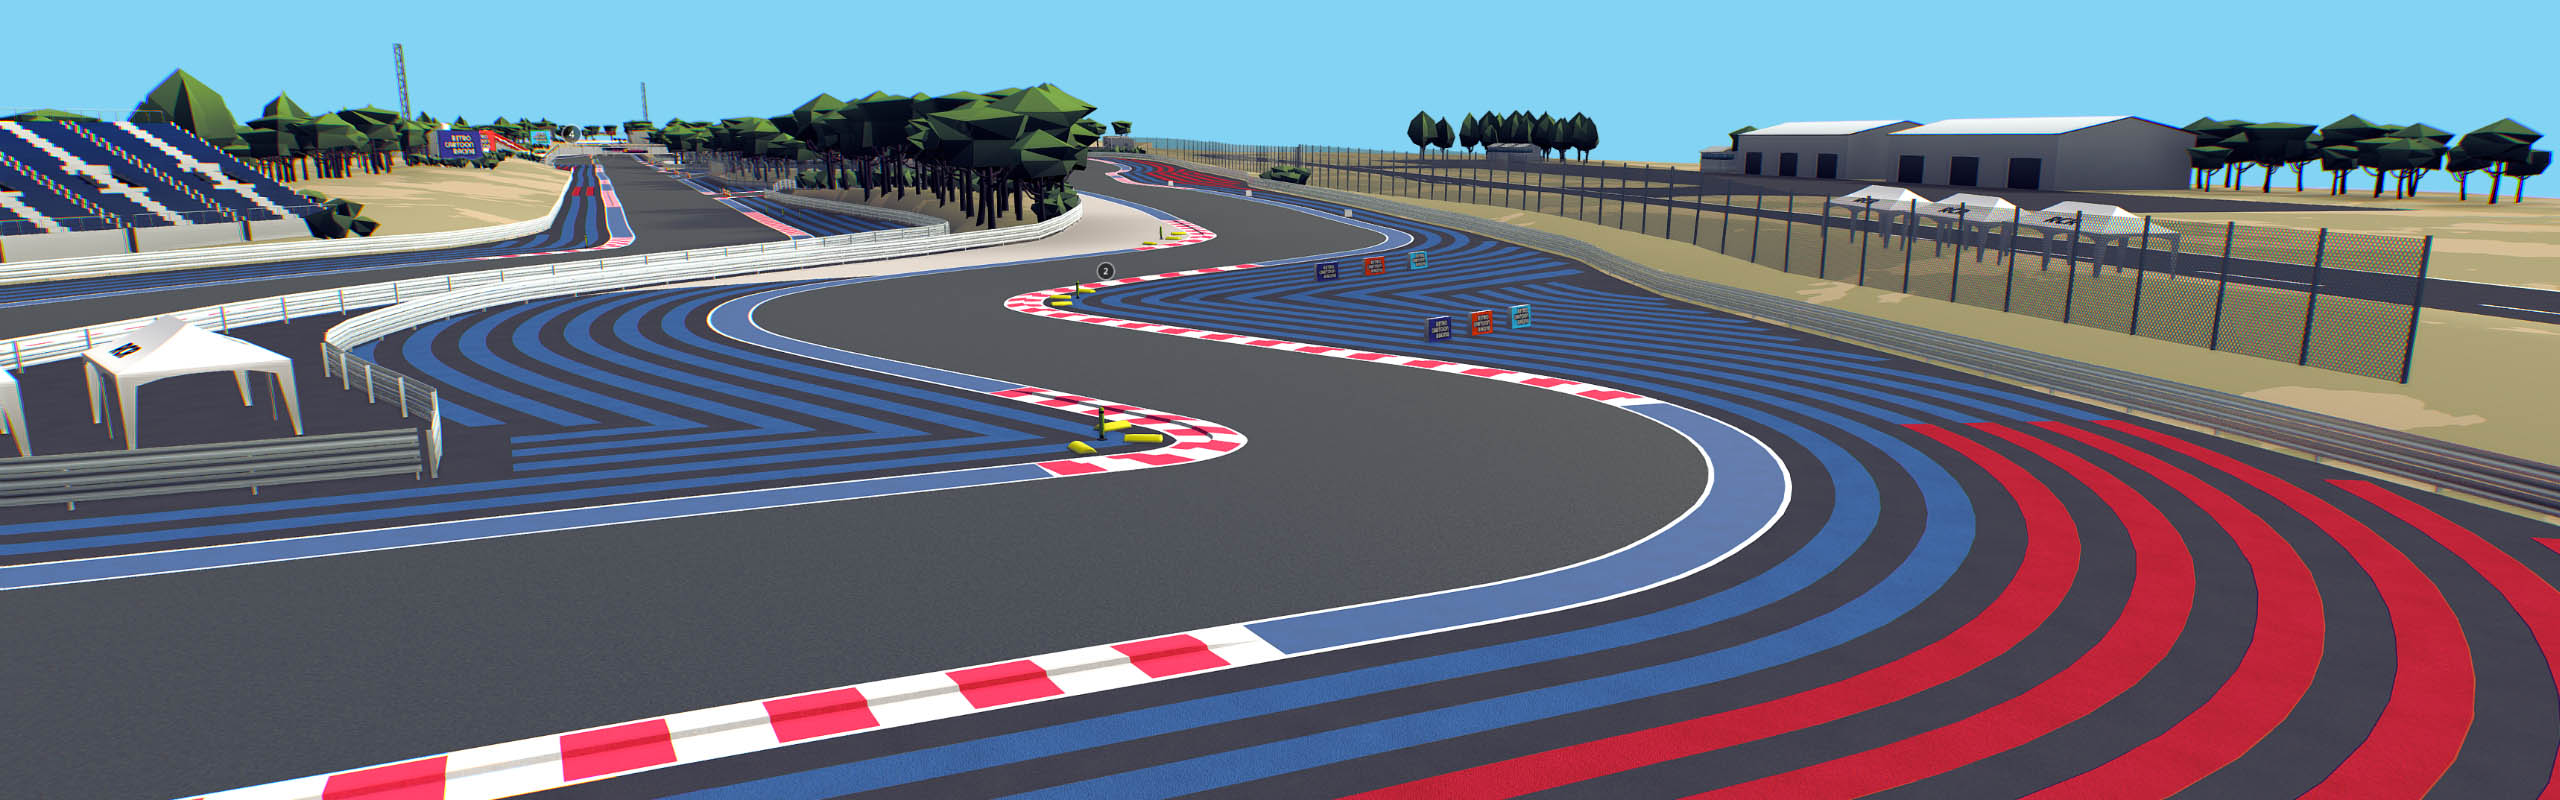 Cartoon Style Race Track Castellet